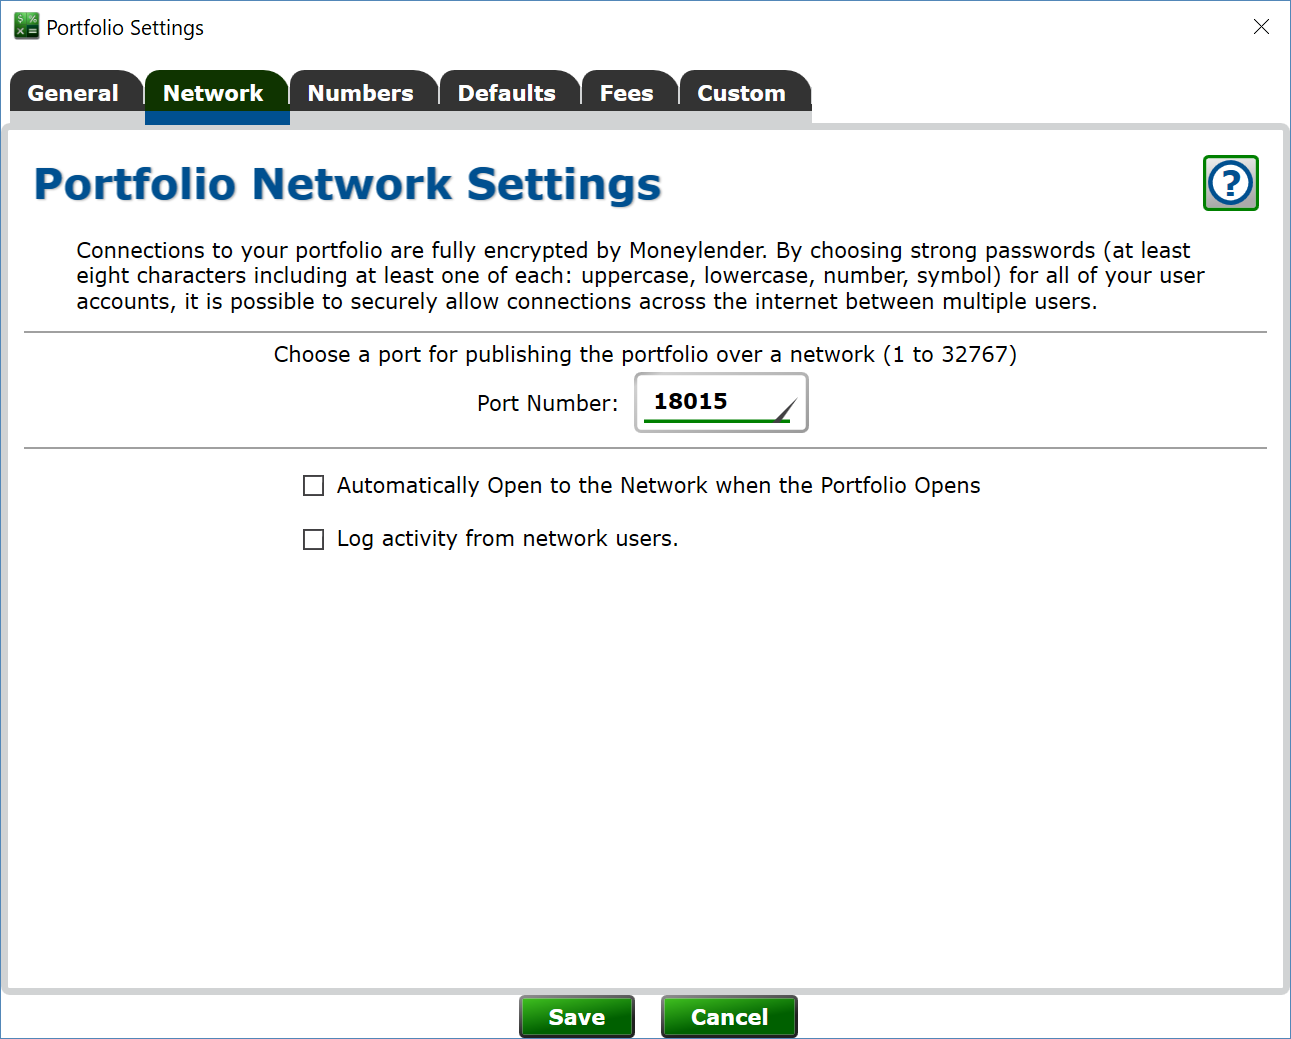 Portfolio Network Settings